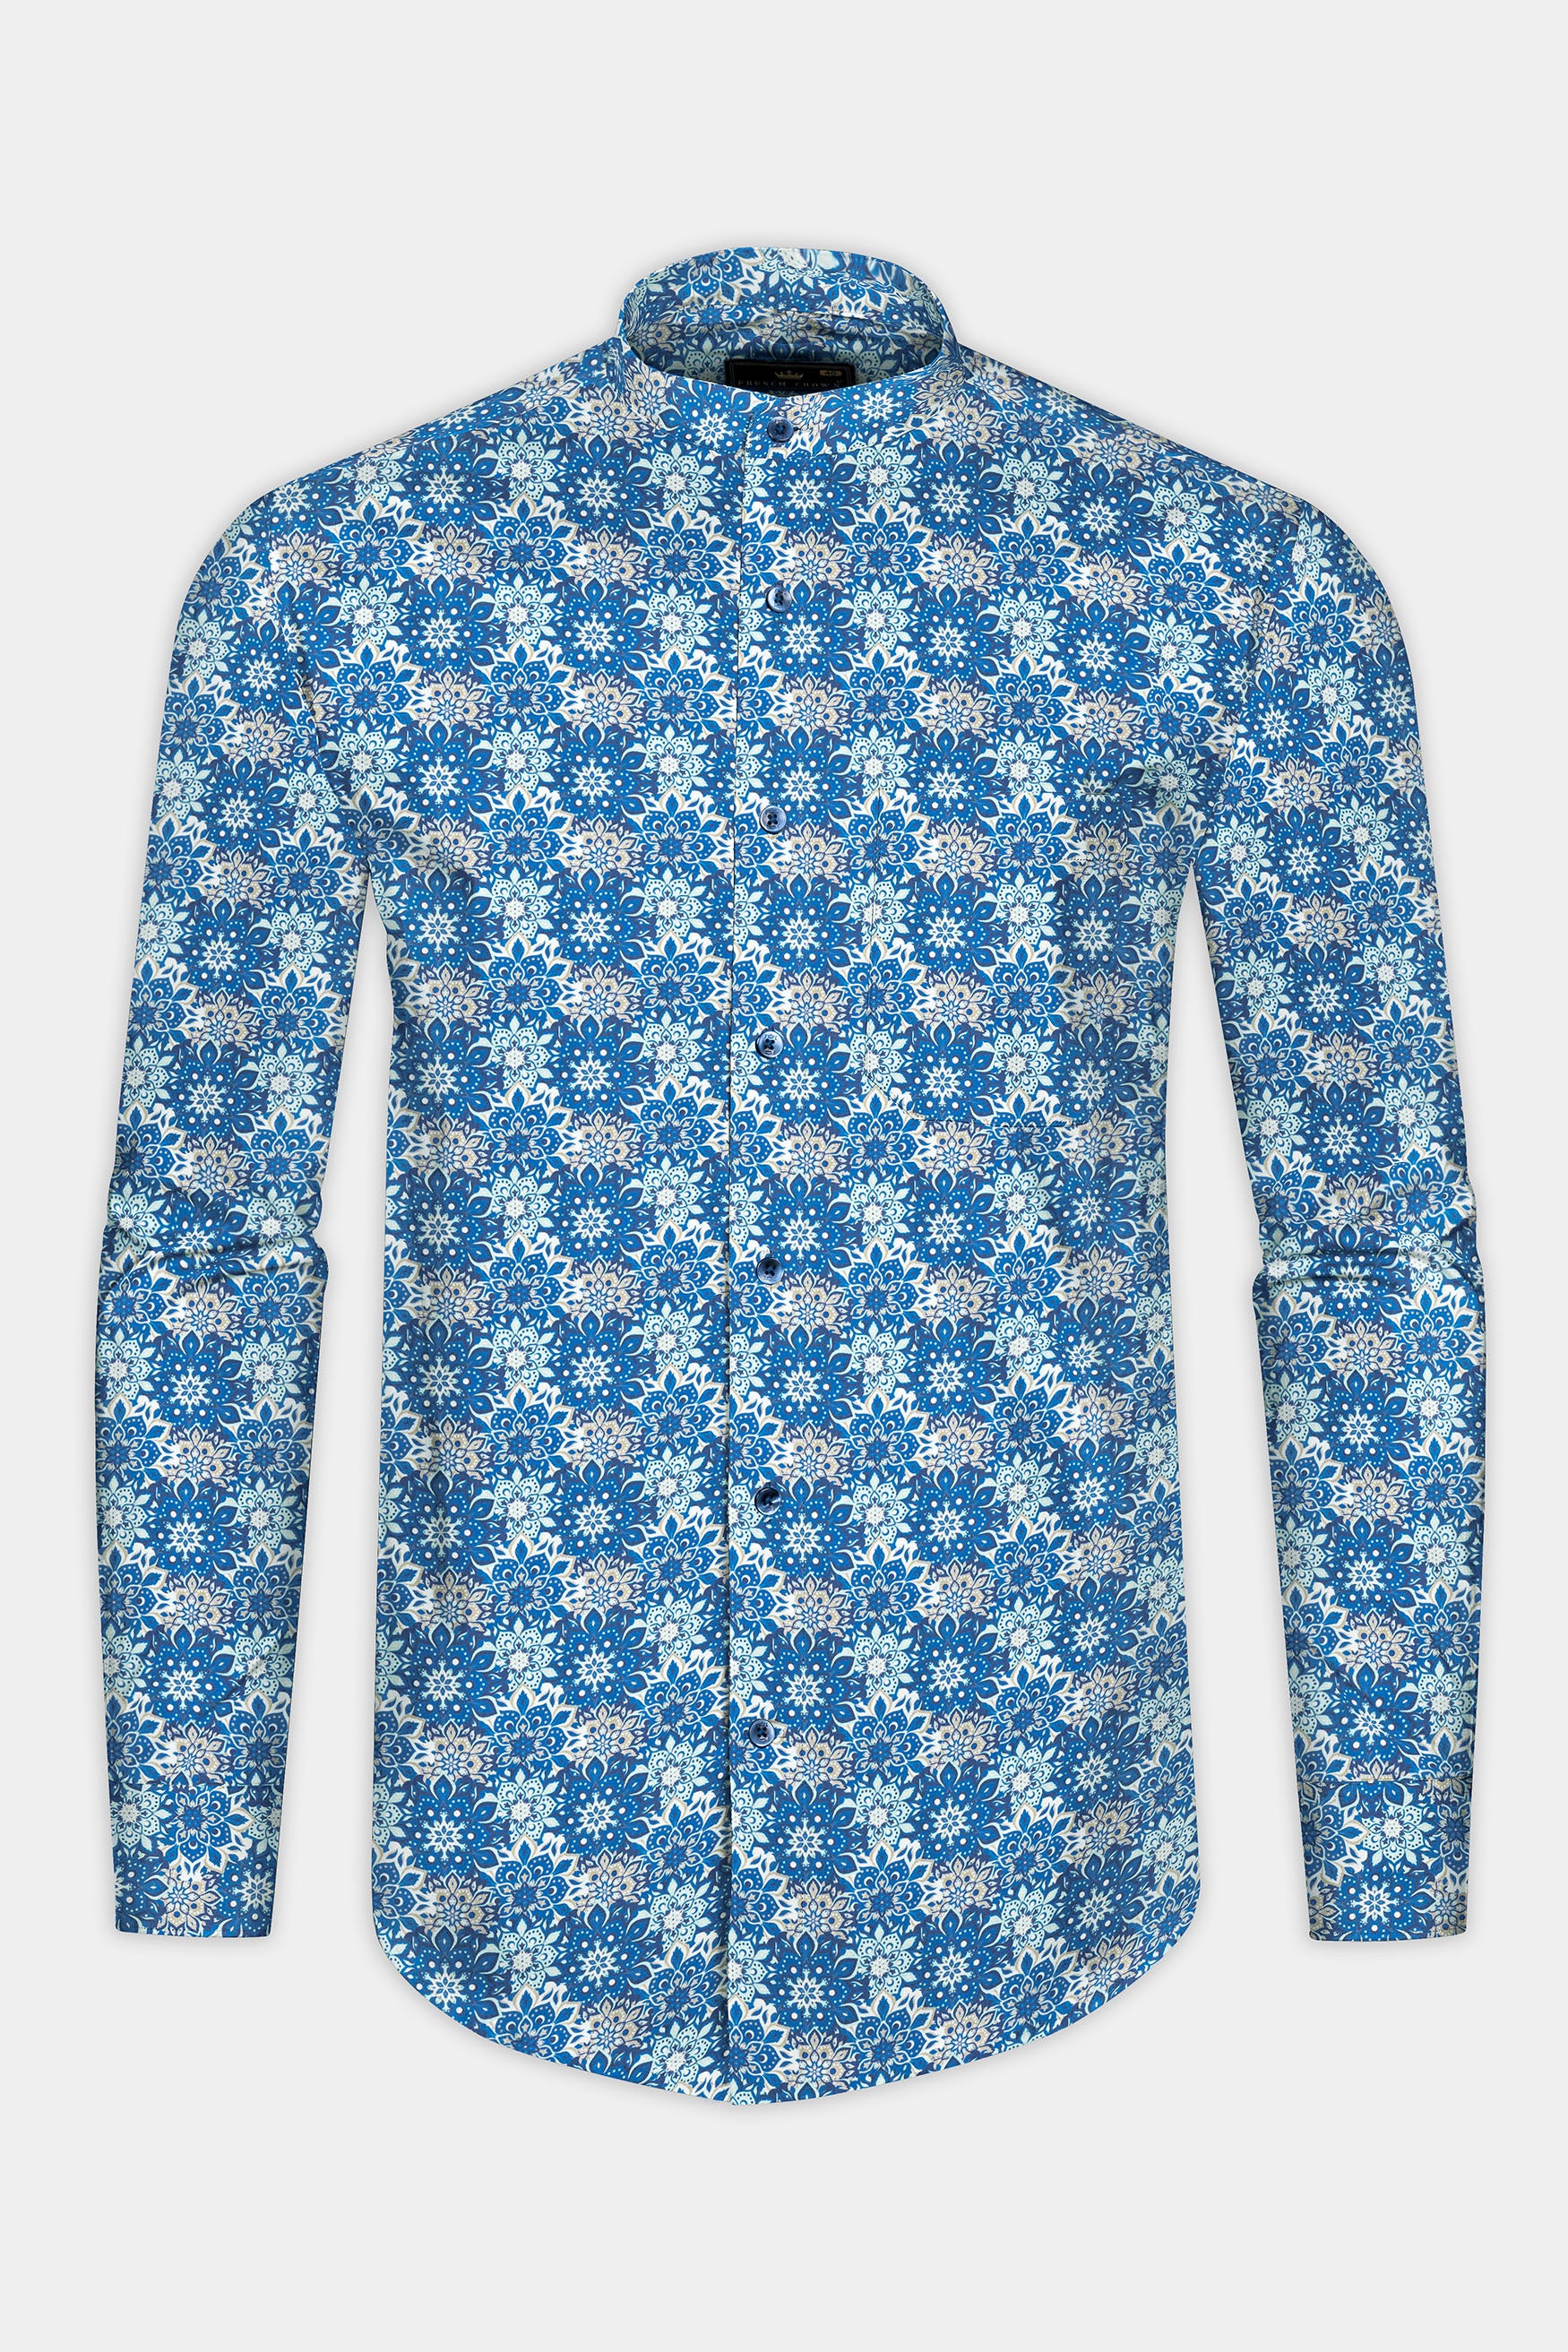 Bluish and Zorba Gray Azulejo Subtle Sheen Prints Super Soft Premium Cotton Shirt